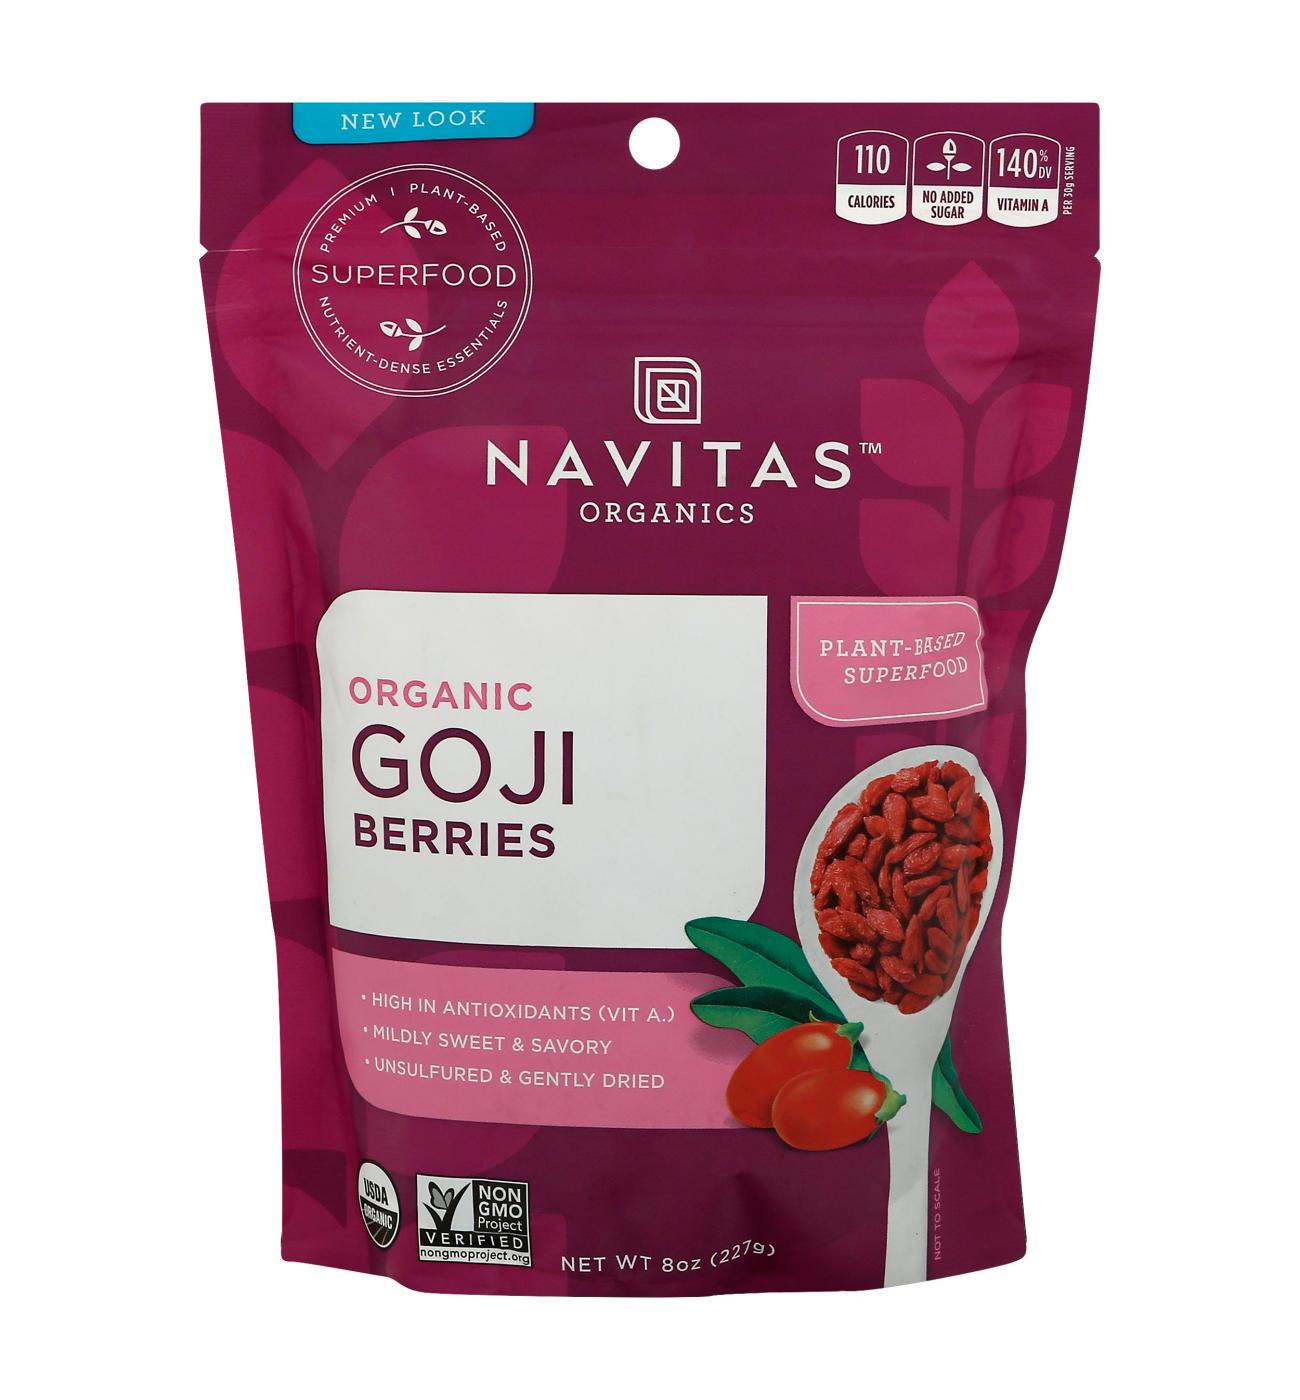 Navitas Organics Goji Berries; image 1 of 2